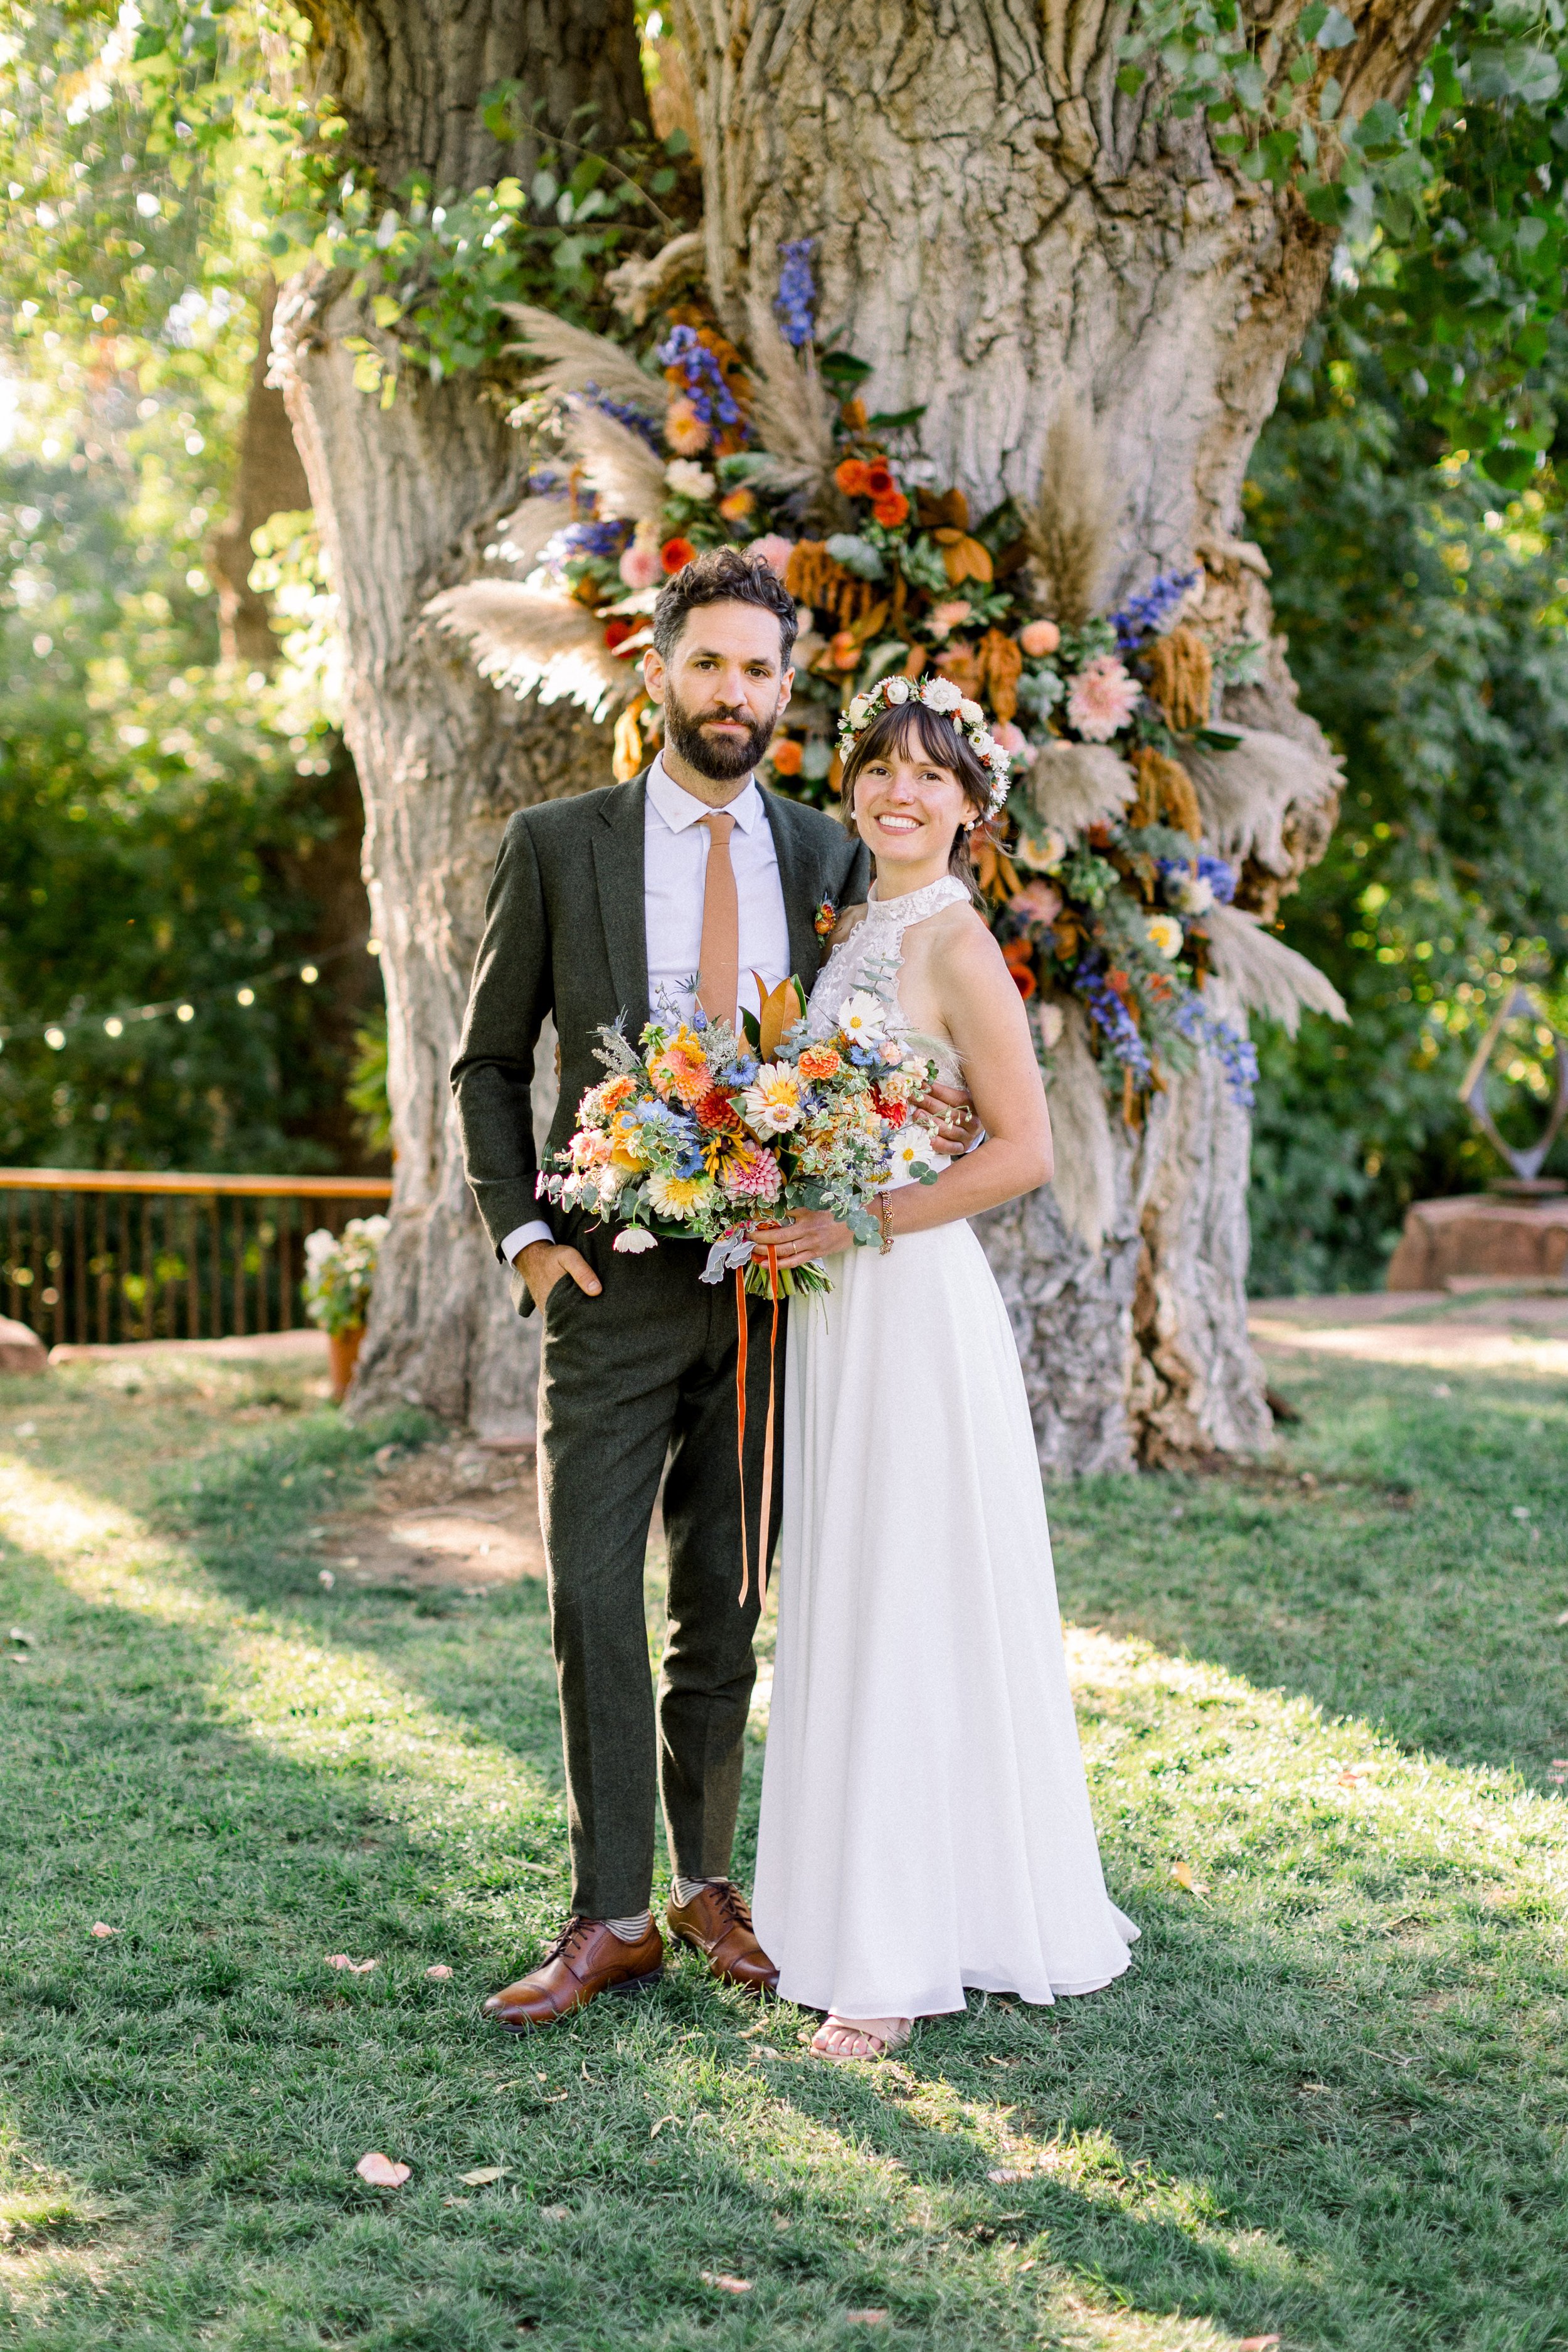 Plume&Furrow-Weddinf-Florist-Taylor&Ryan-ChelseaSliwaPhotography-Lyons-Farmette-September-Colorado-Couple-Portrait-Floral-Tree-Wrap-Ceremony.jpg